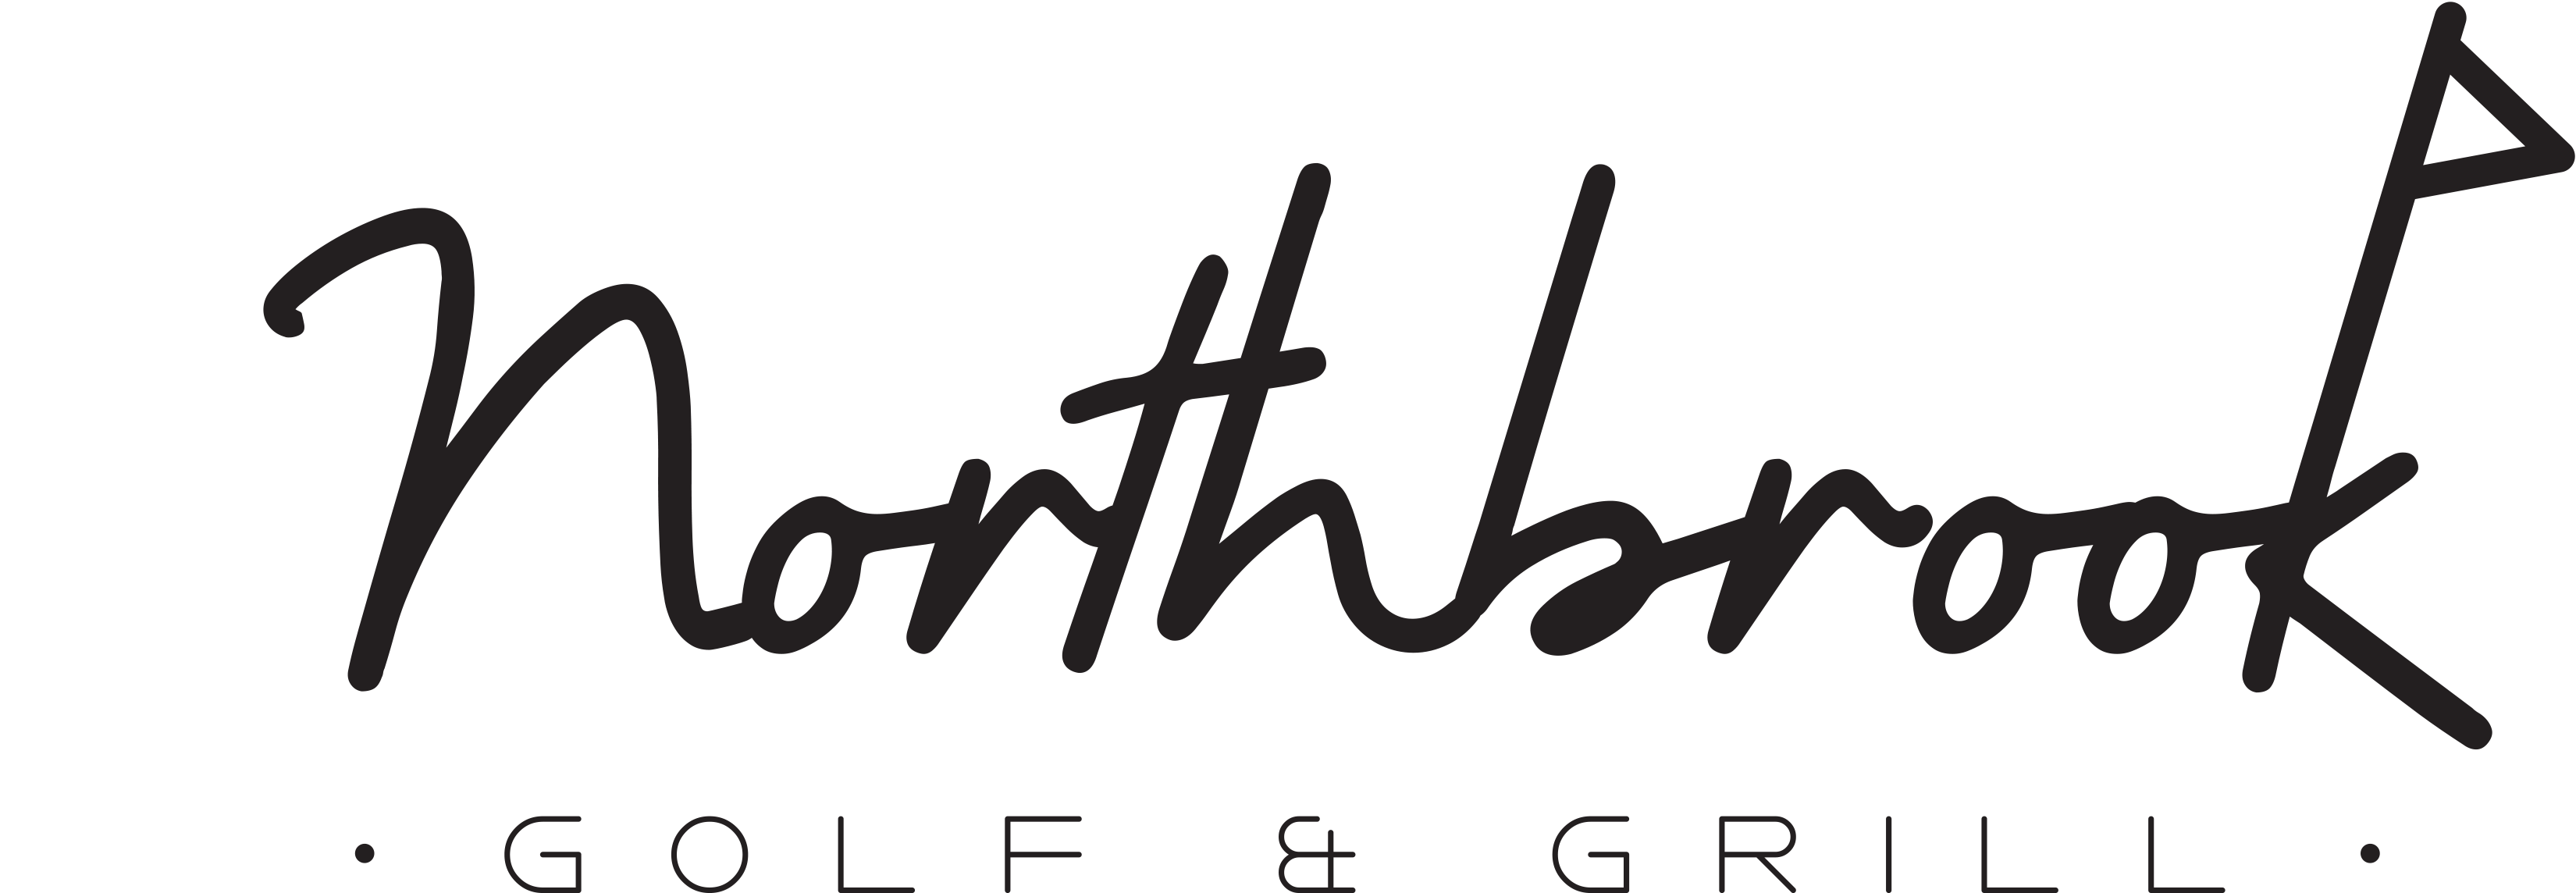 Northbrook Golf & Grill